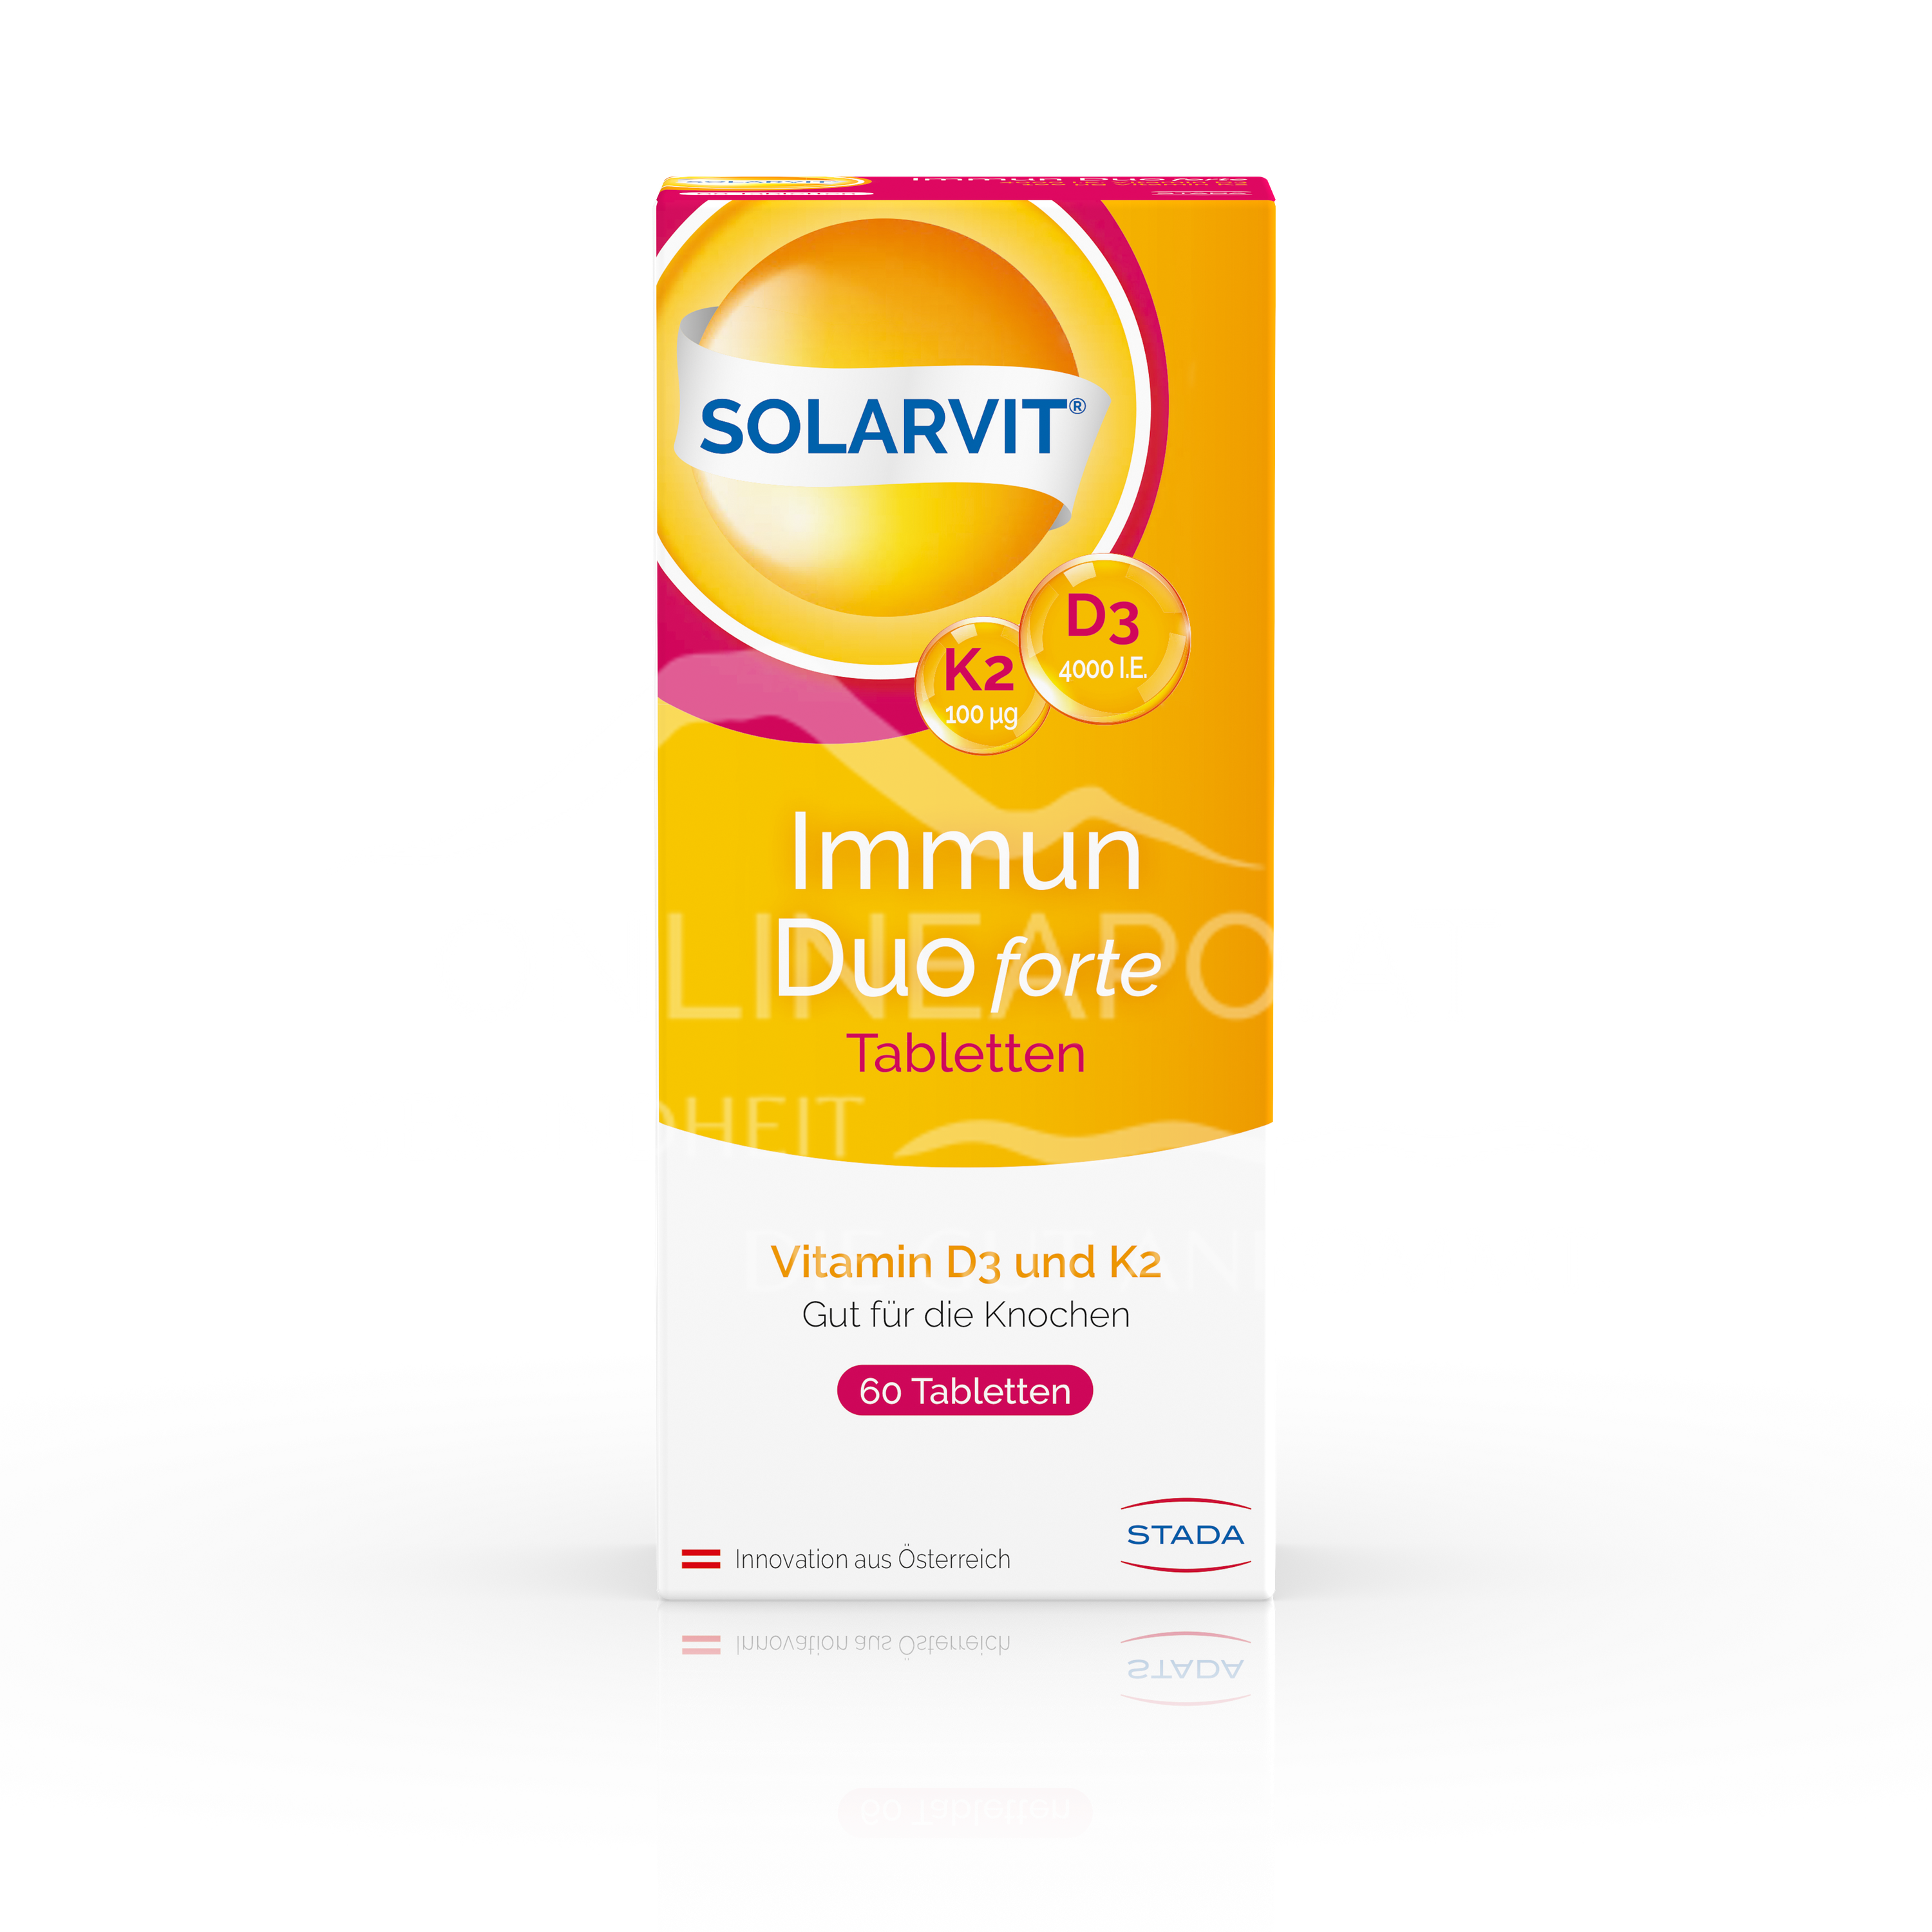 SOLARVIT® Immun Duo forte Tabletten